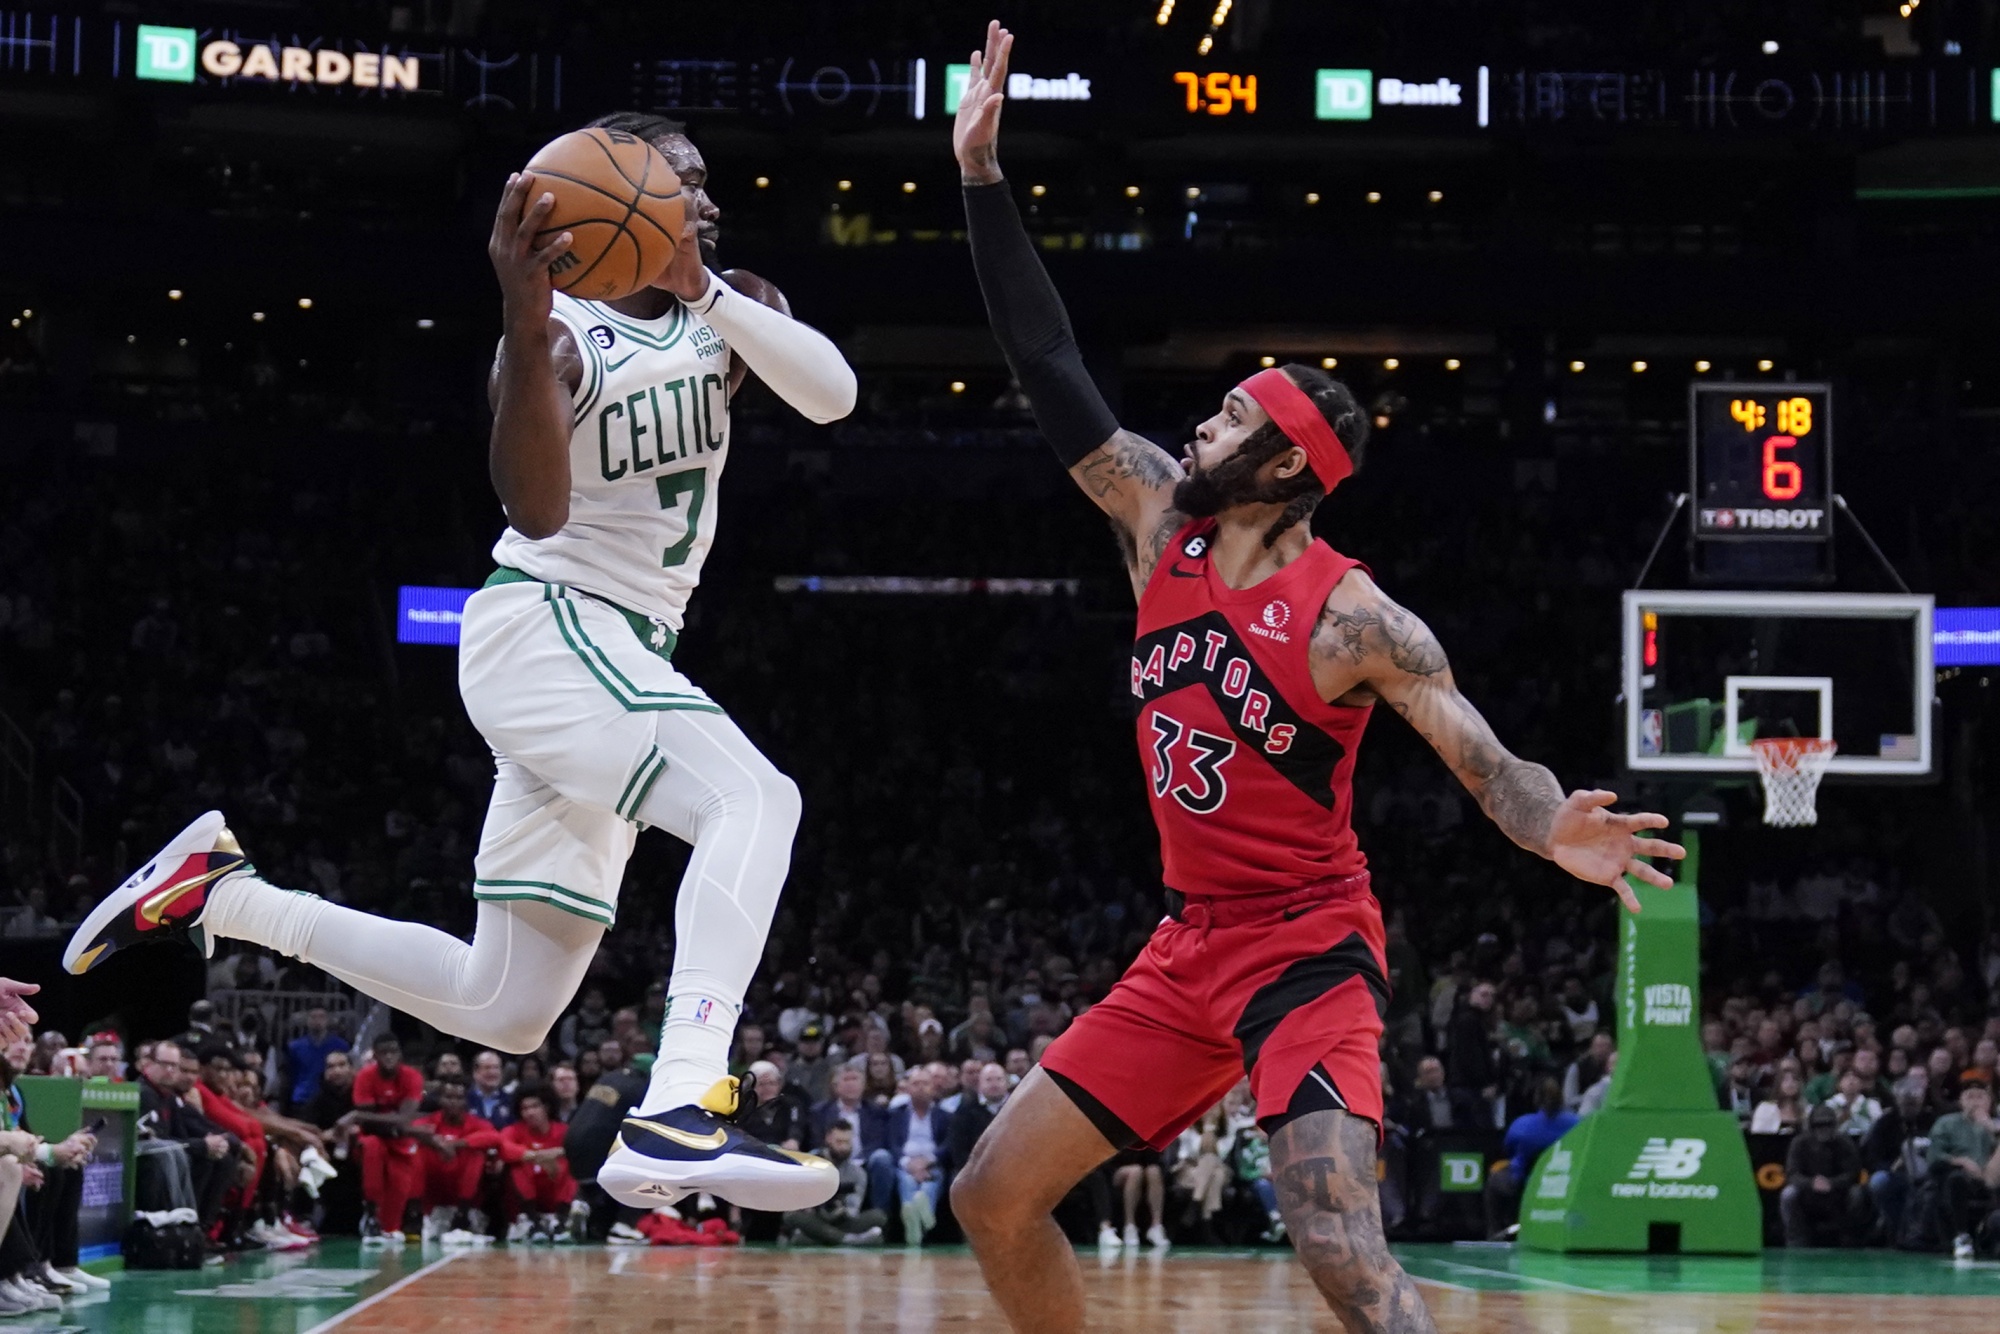 Celtics confirm Hayward will wear No. 20, Allen's old number